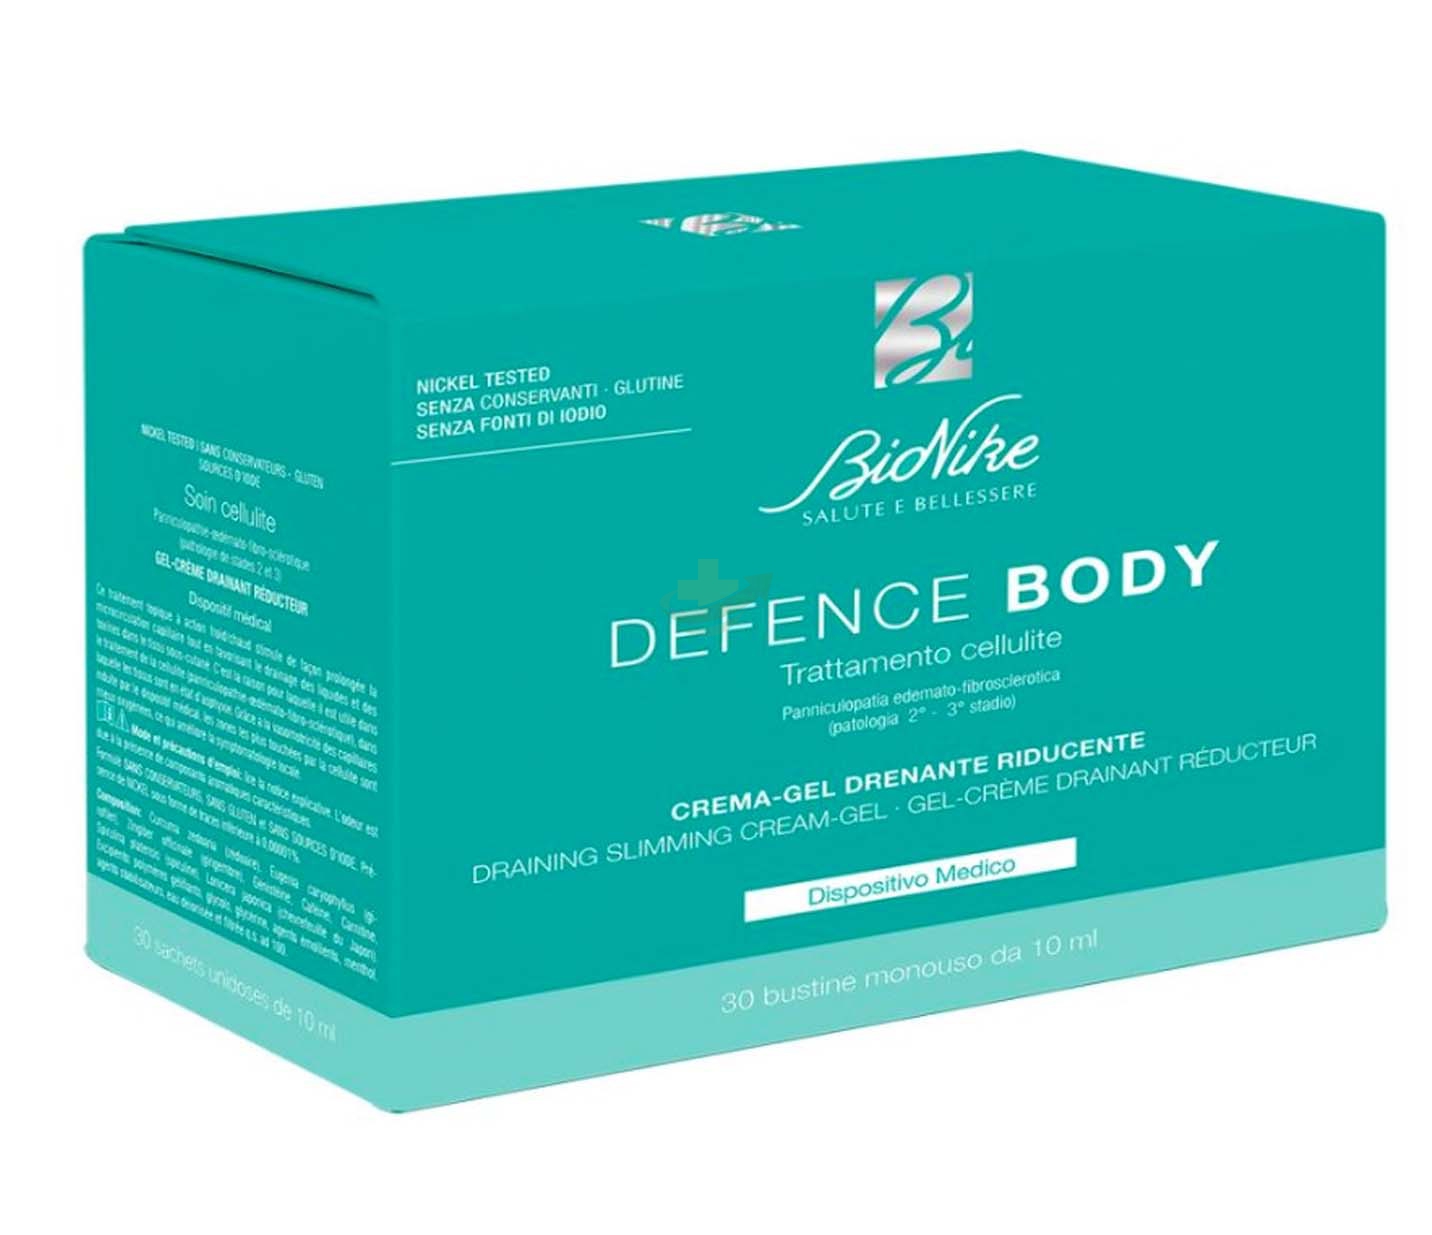 Defence Body Trattamento Cellulite 30Bust.